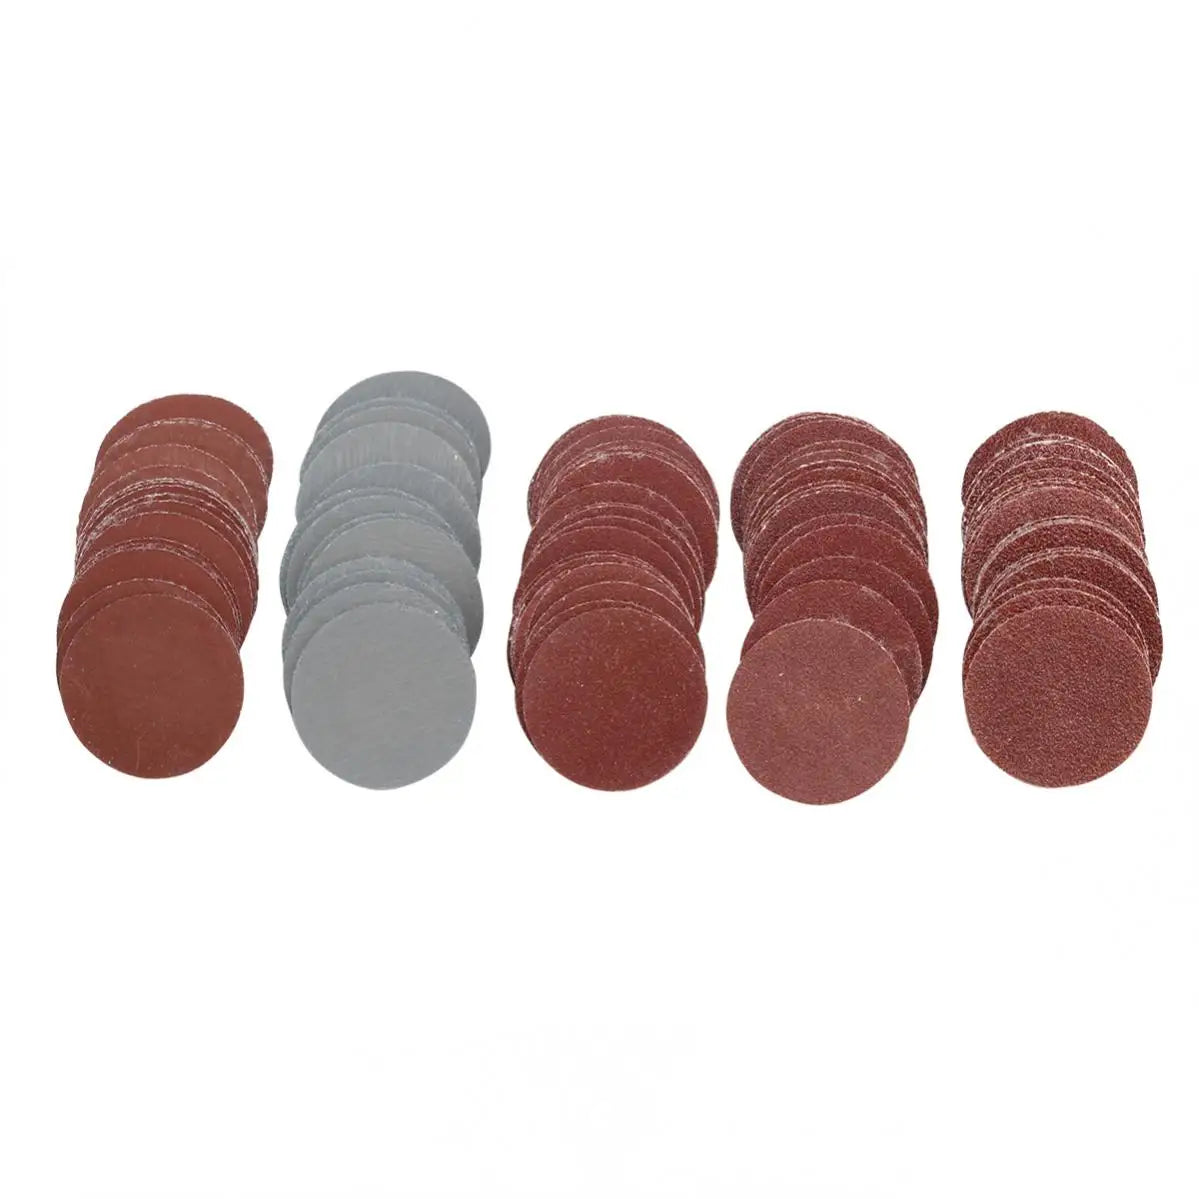 100pcs 1 Inch Sandpapers Set 100/180/240/1500/3000 Grit Sander Discs with Grinding Disc